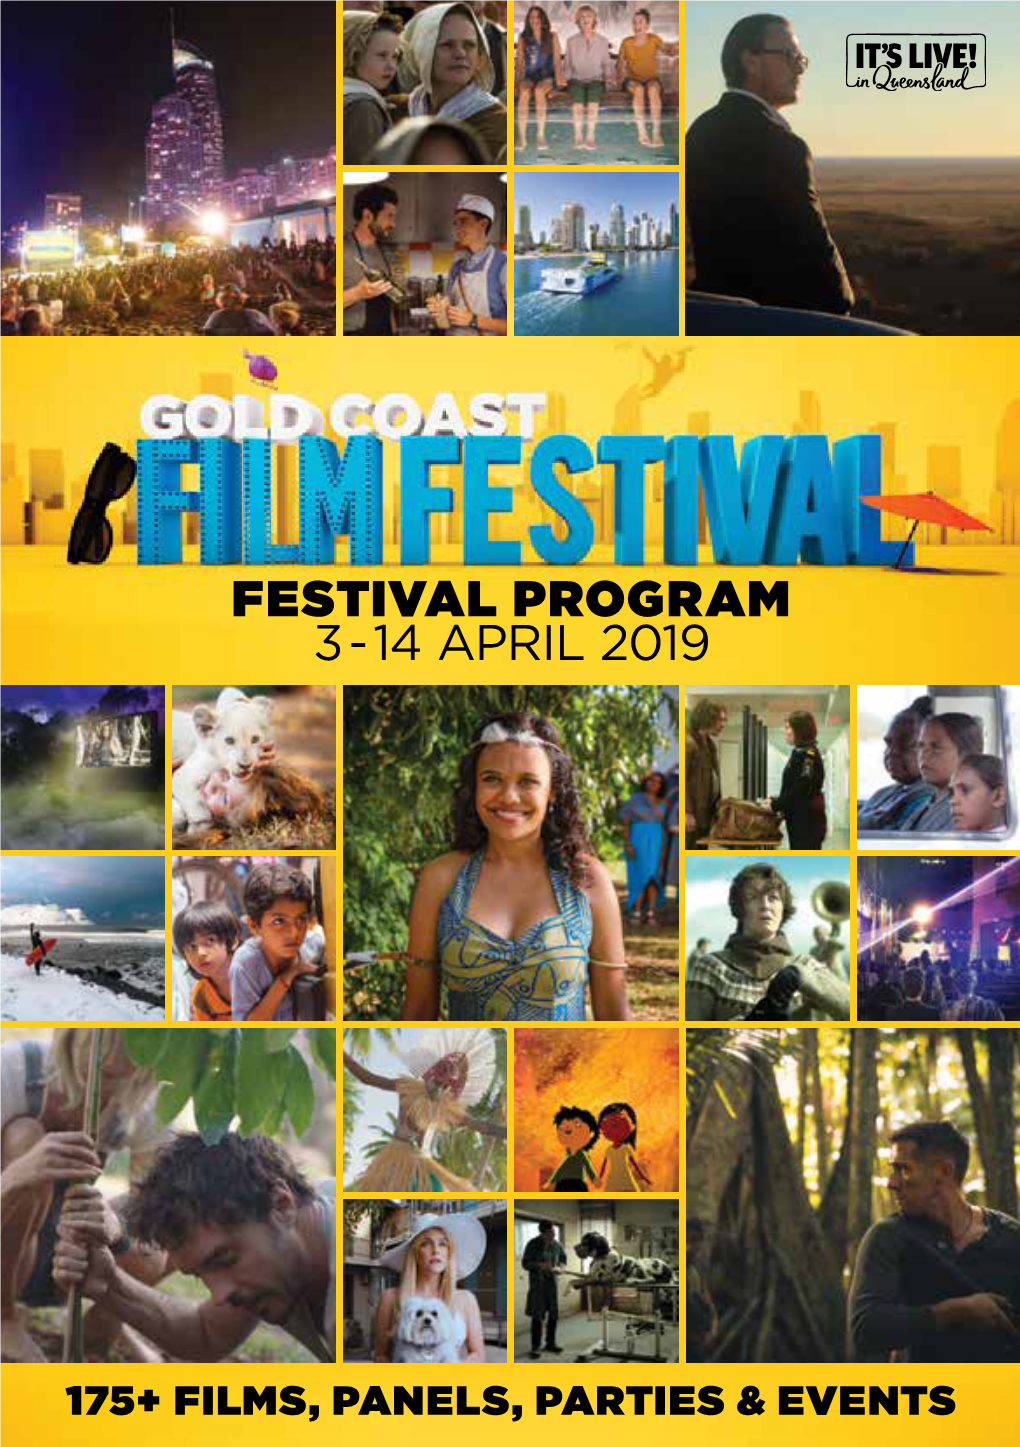 Festival Program 3 - 14 April 2019